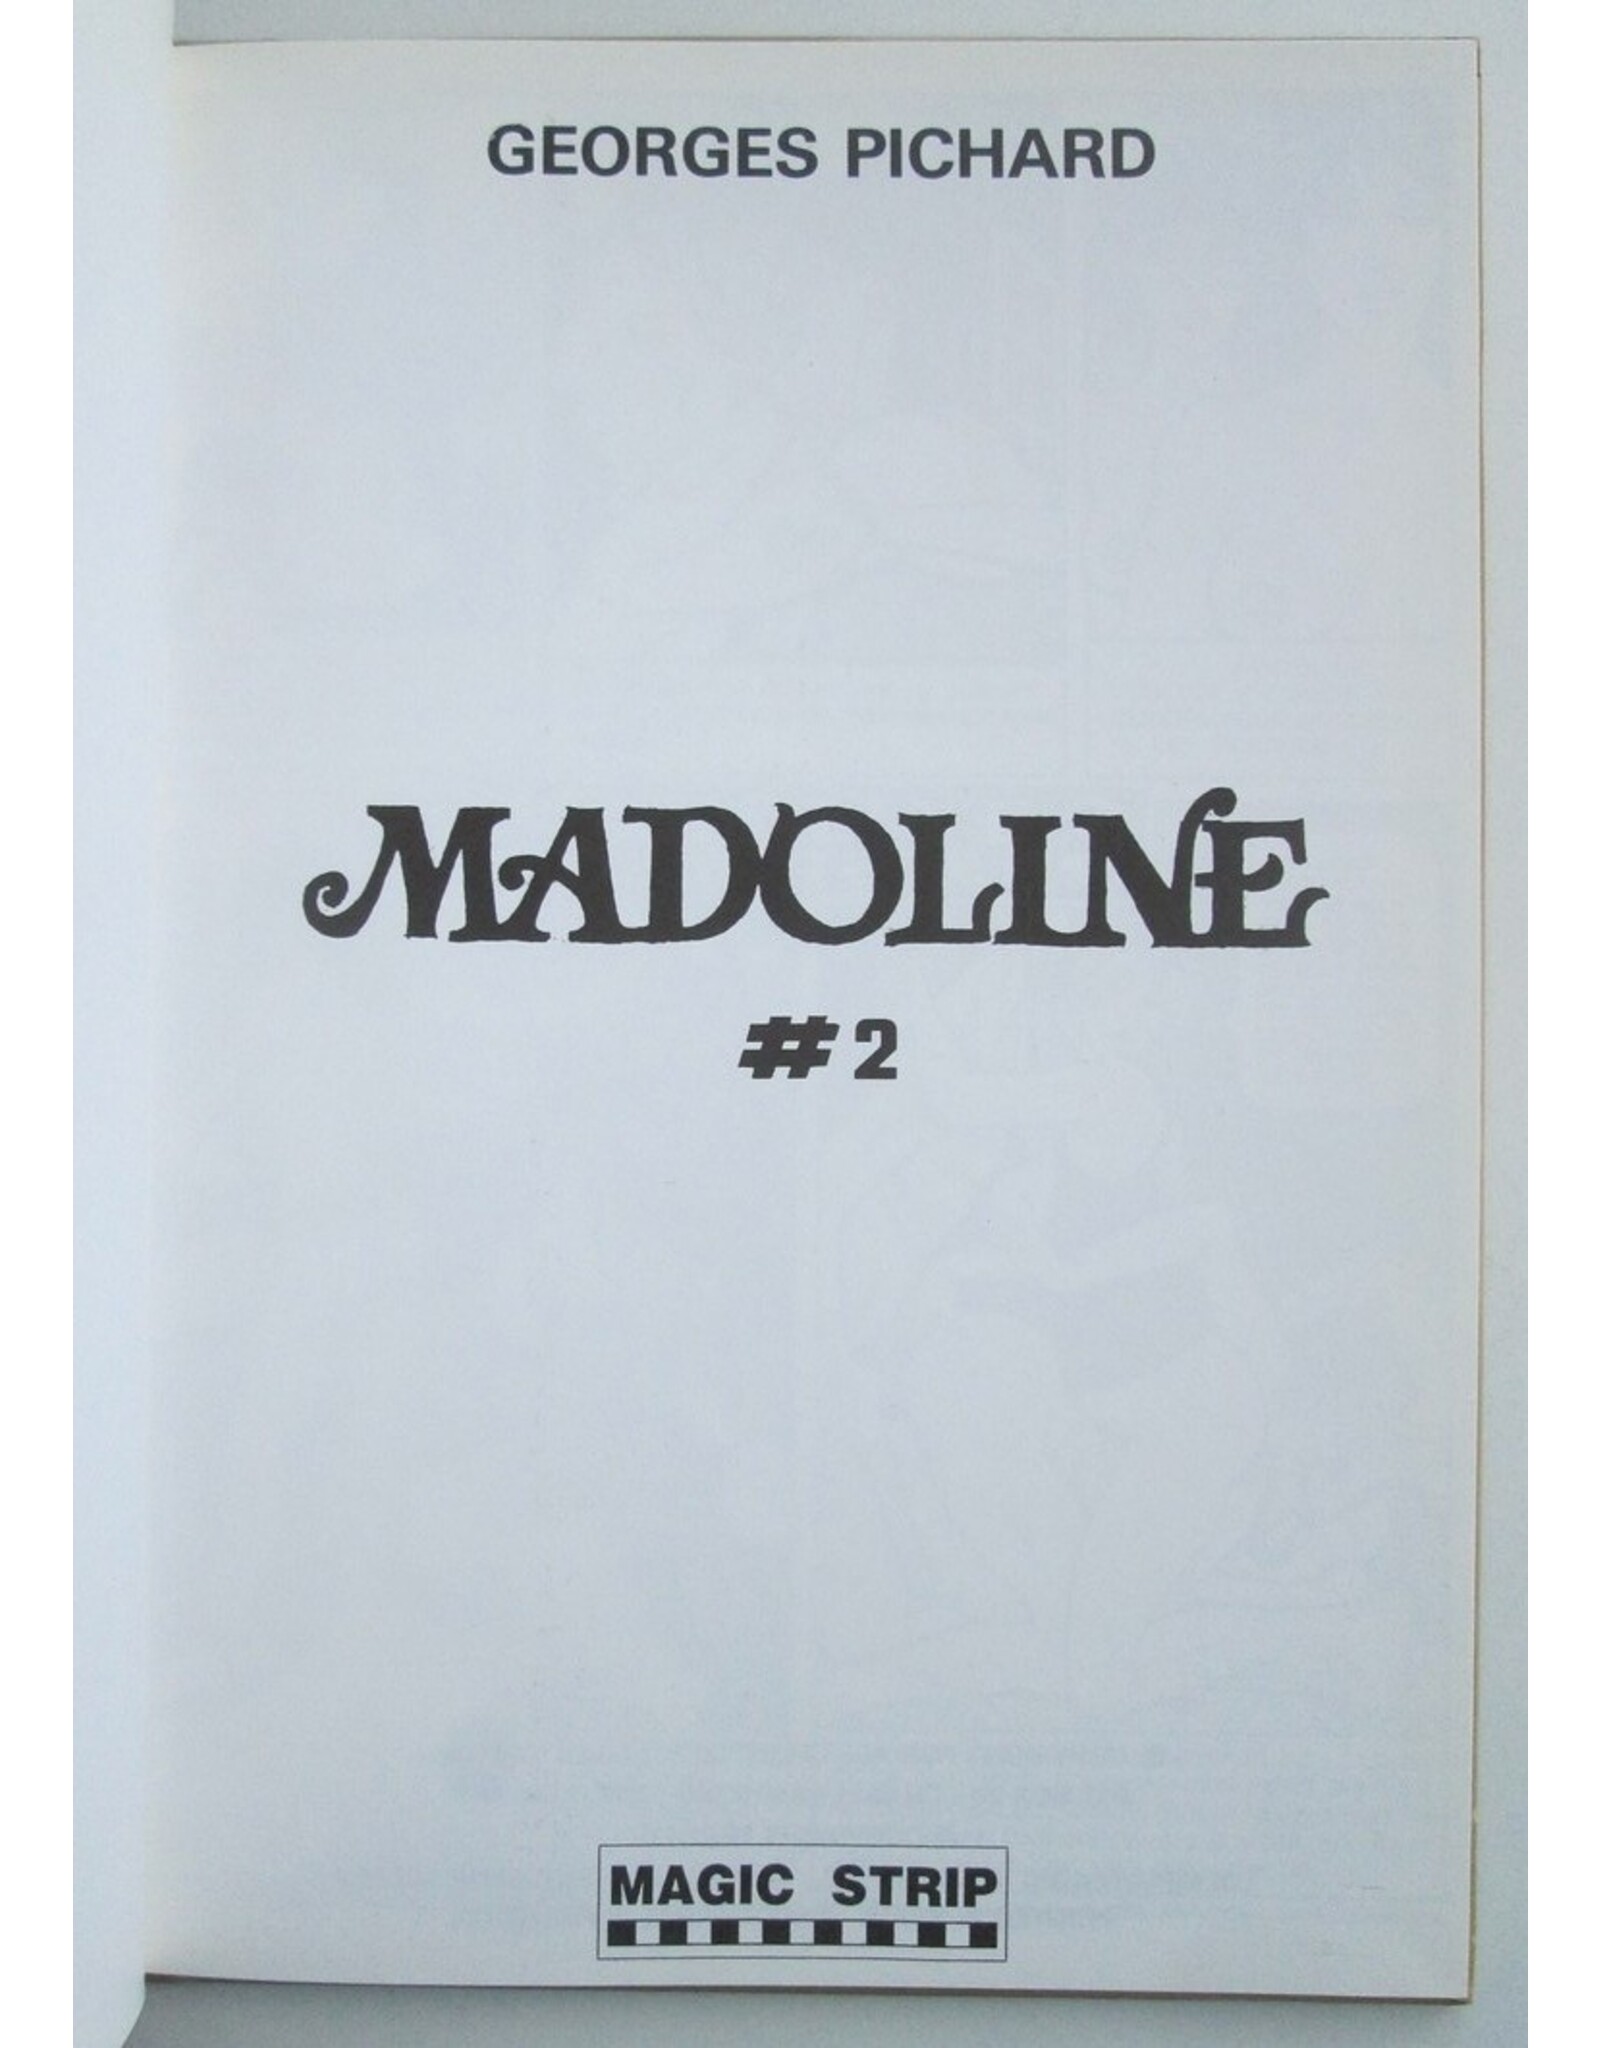 Georges Pichard - Madoline #2